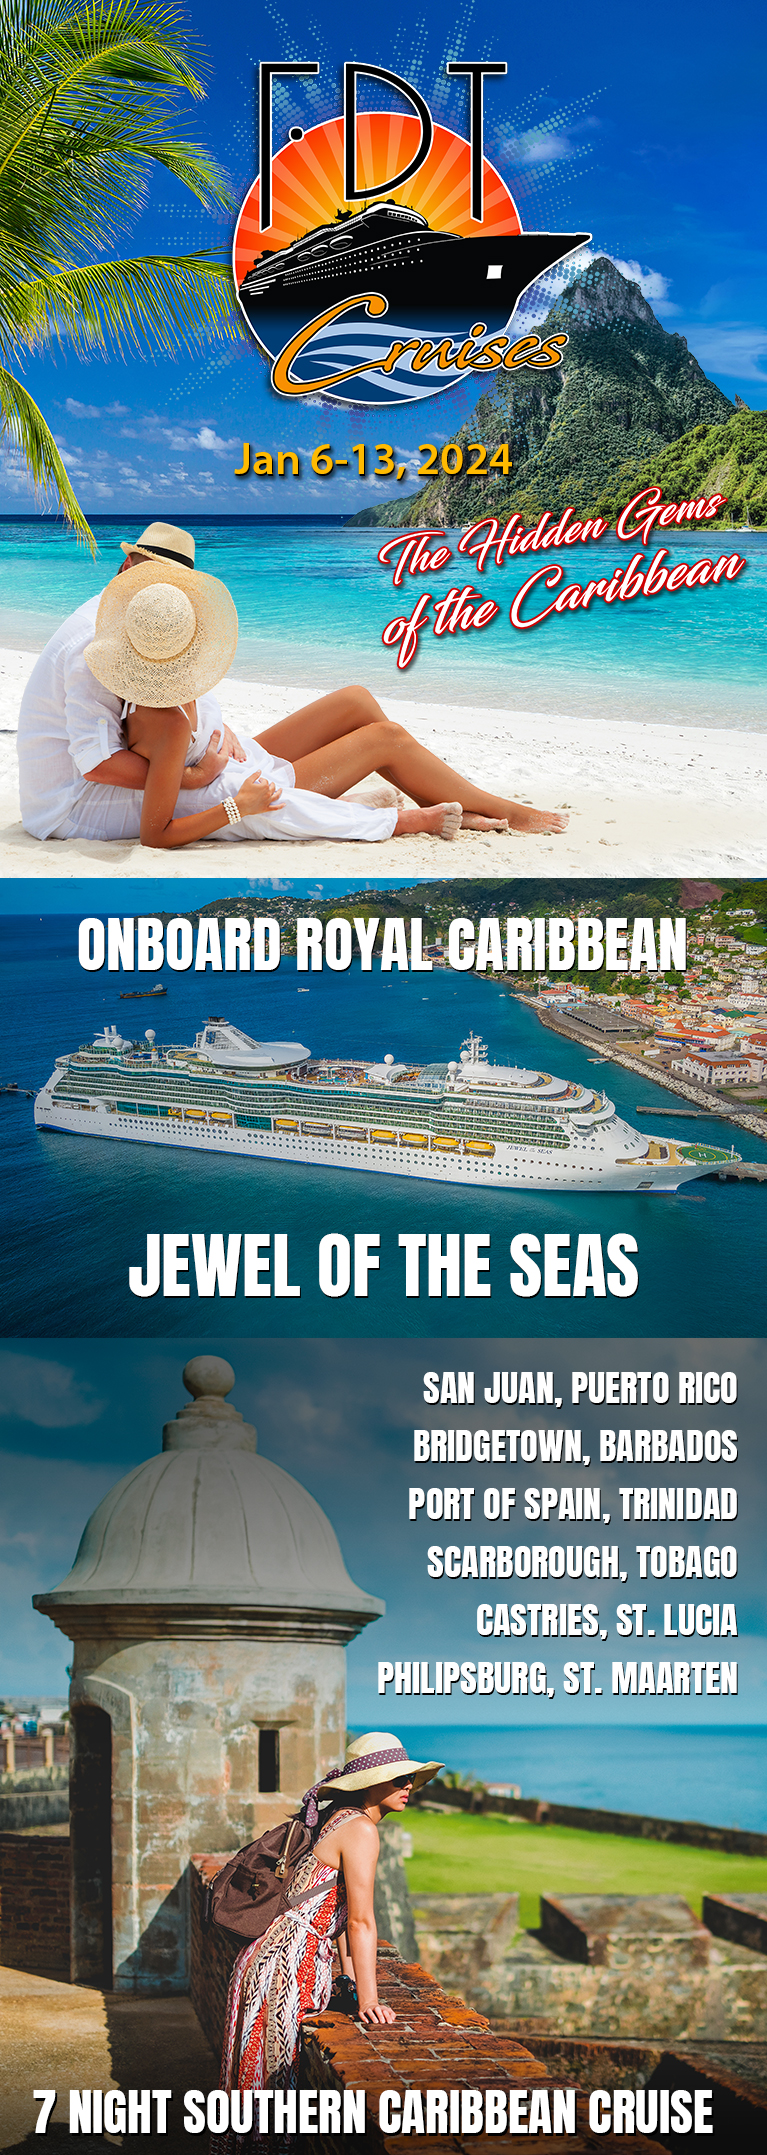 jamaica and barbados cruise